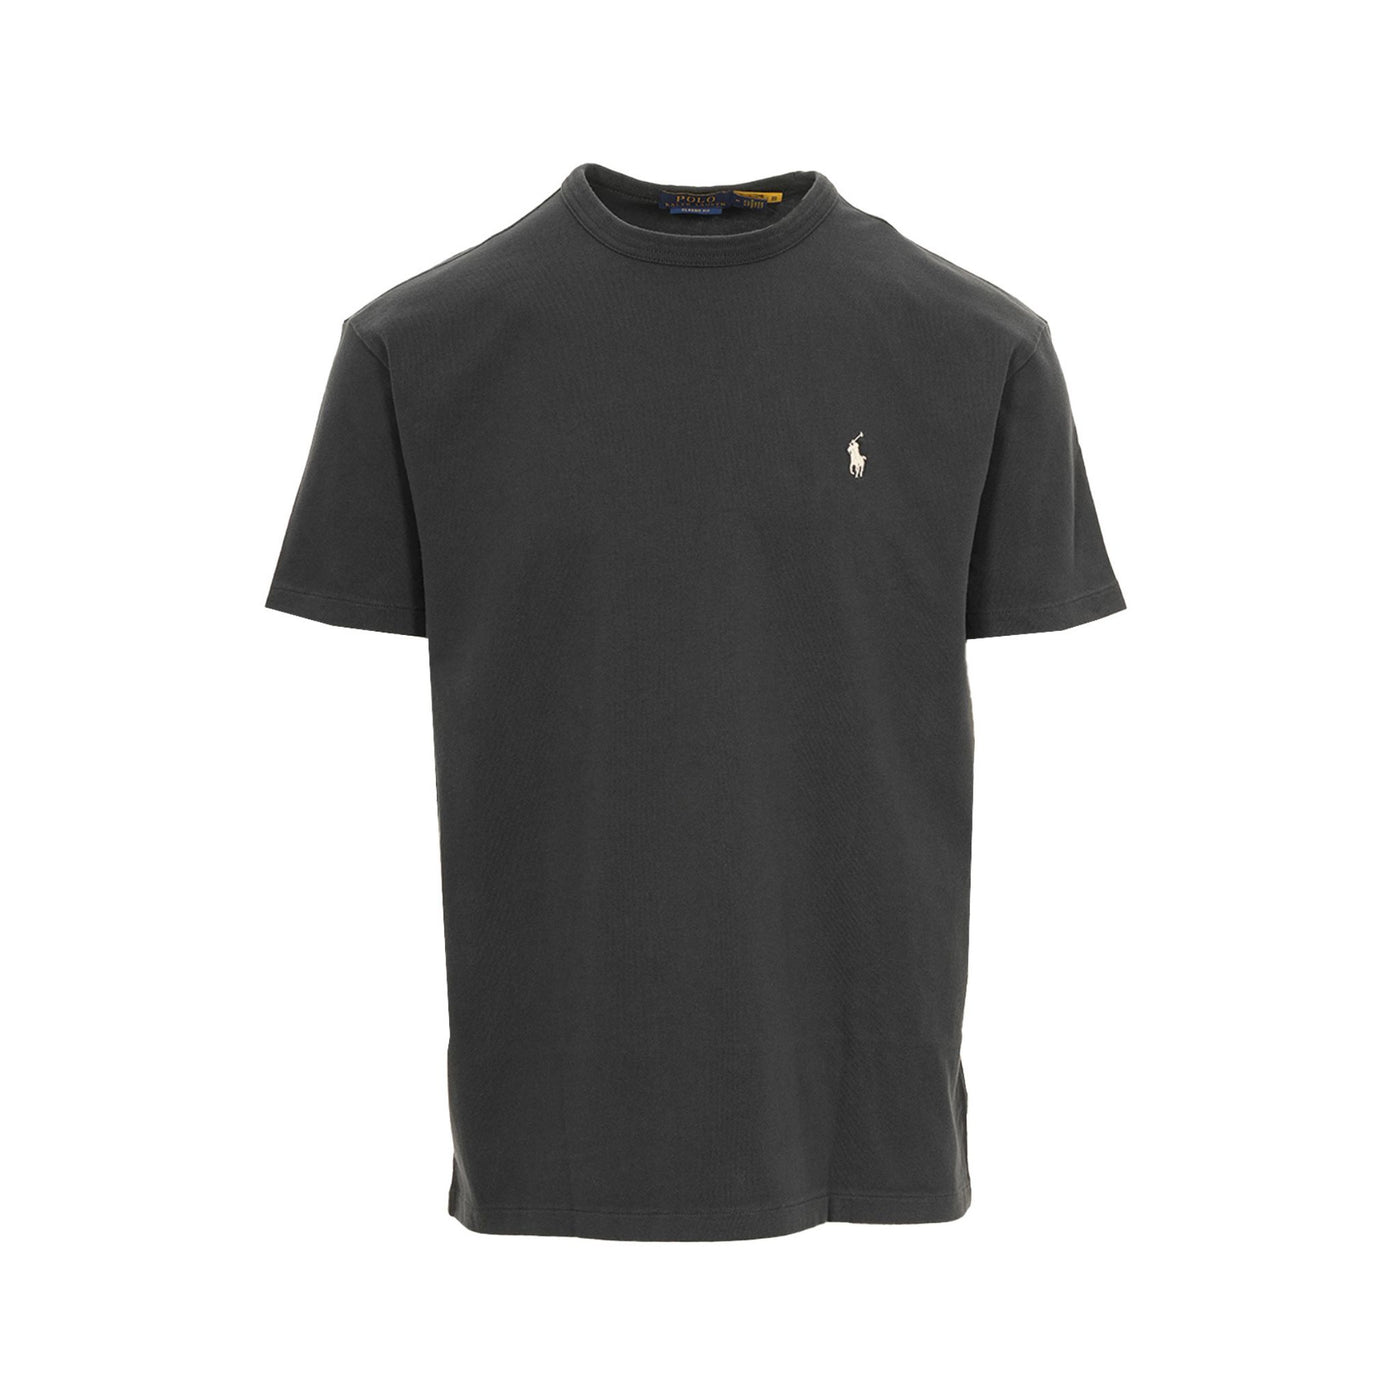 T-shirt Uomo Nera con iconico logo ricamato a contrasto